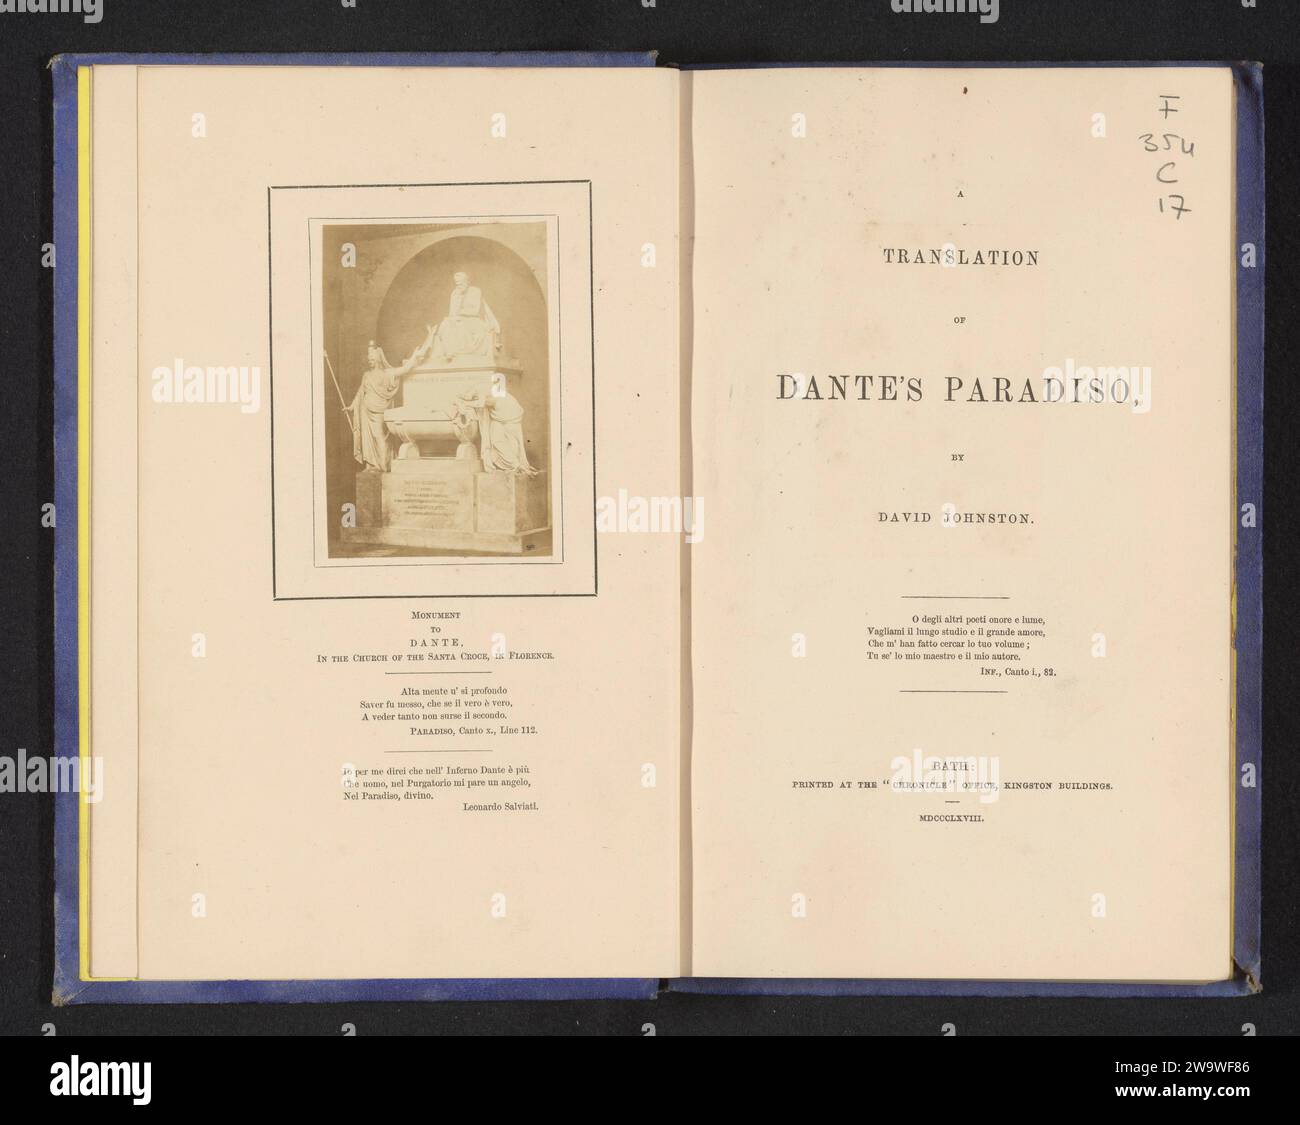 Translation of Dante's Paradiso, Dante Alighieri, book   paper. photographic support. linen (material) albumen print Stock Photo